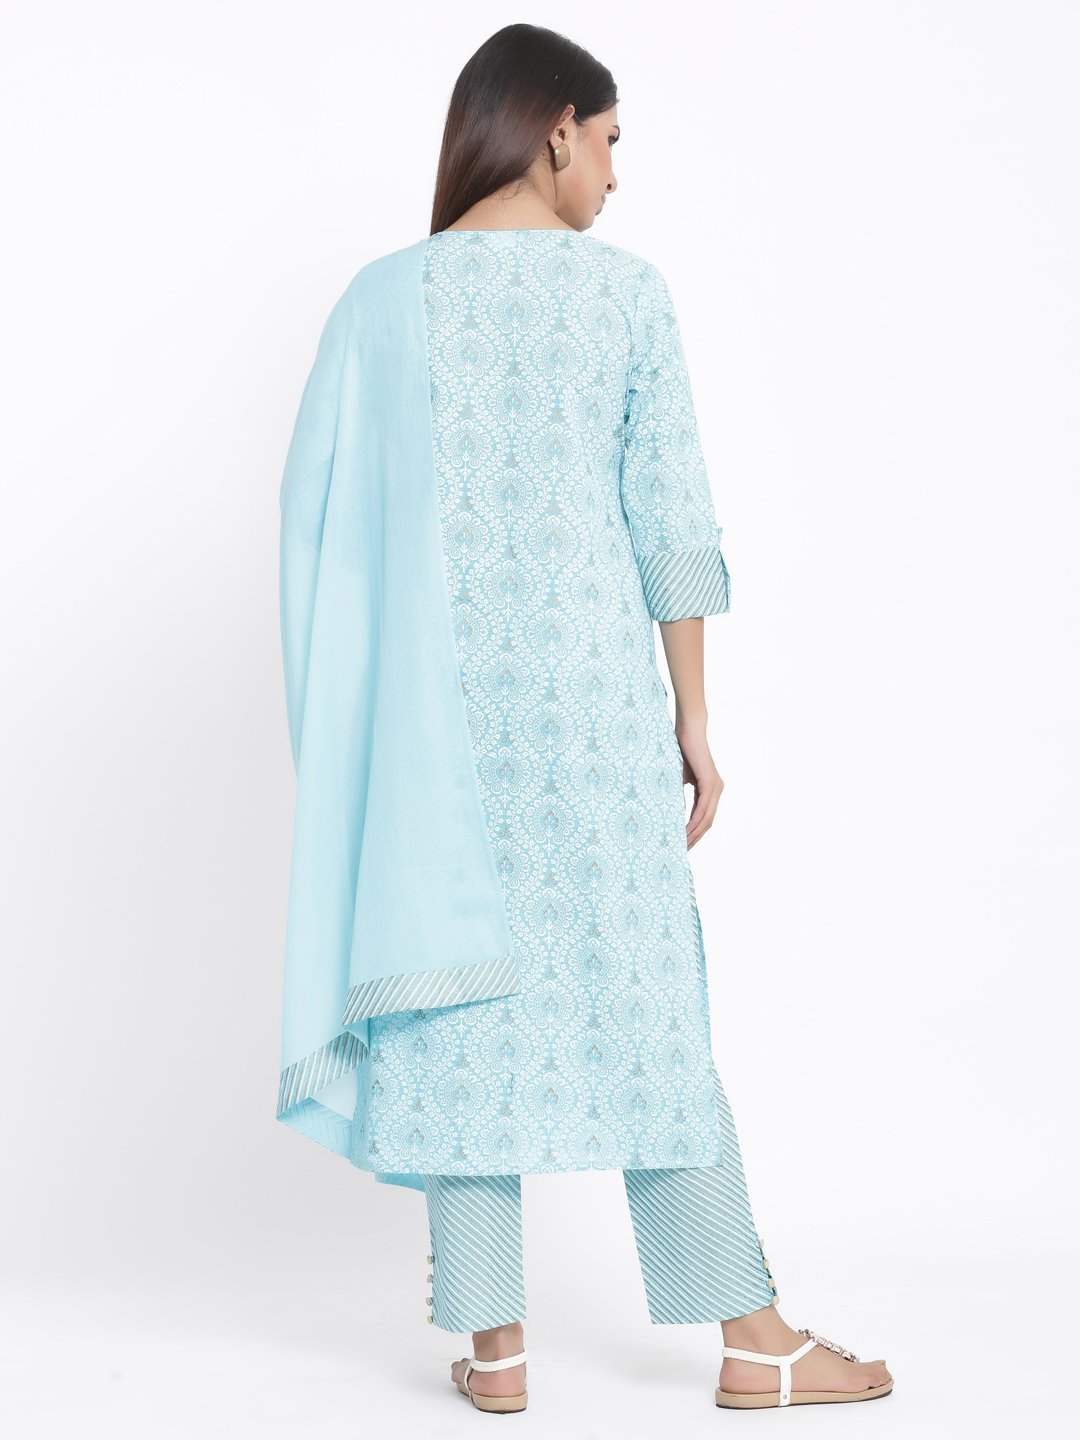 Women's Printed Cotton Fabric Kurta, Palazzo & Dupatta Set Sky Blue Color - Kipek